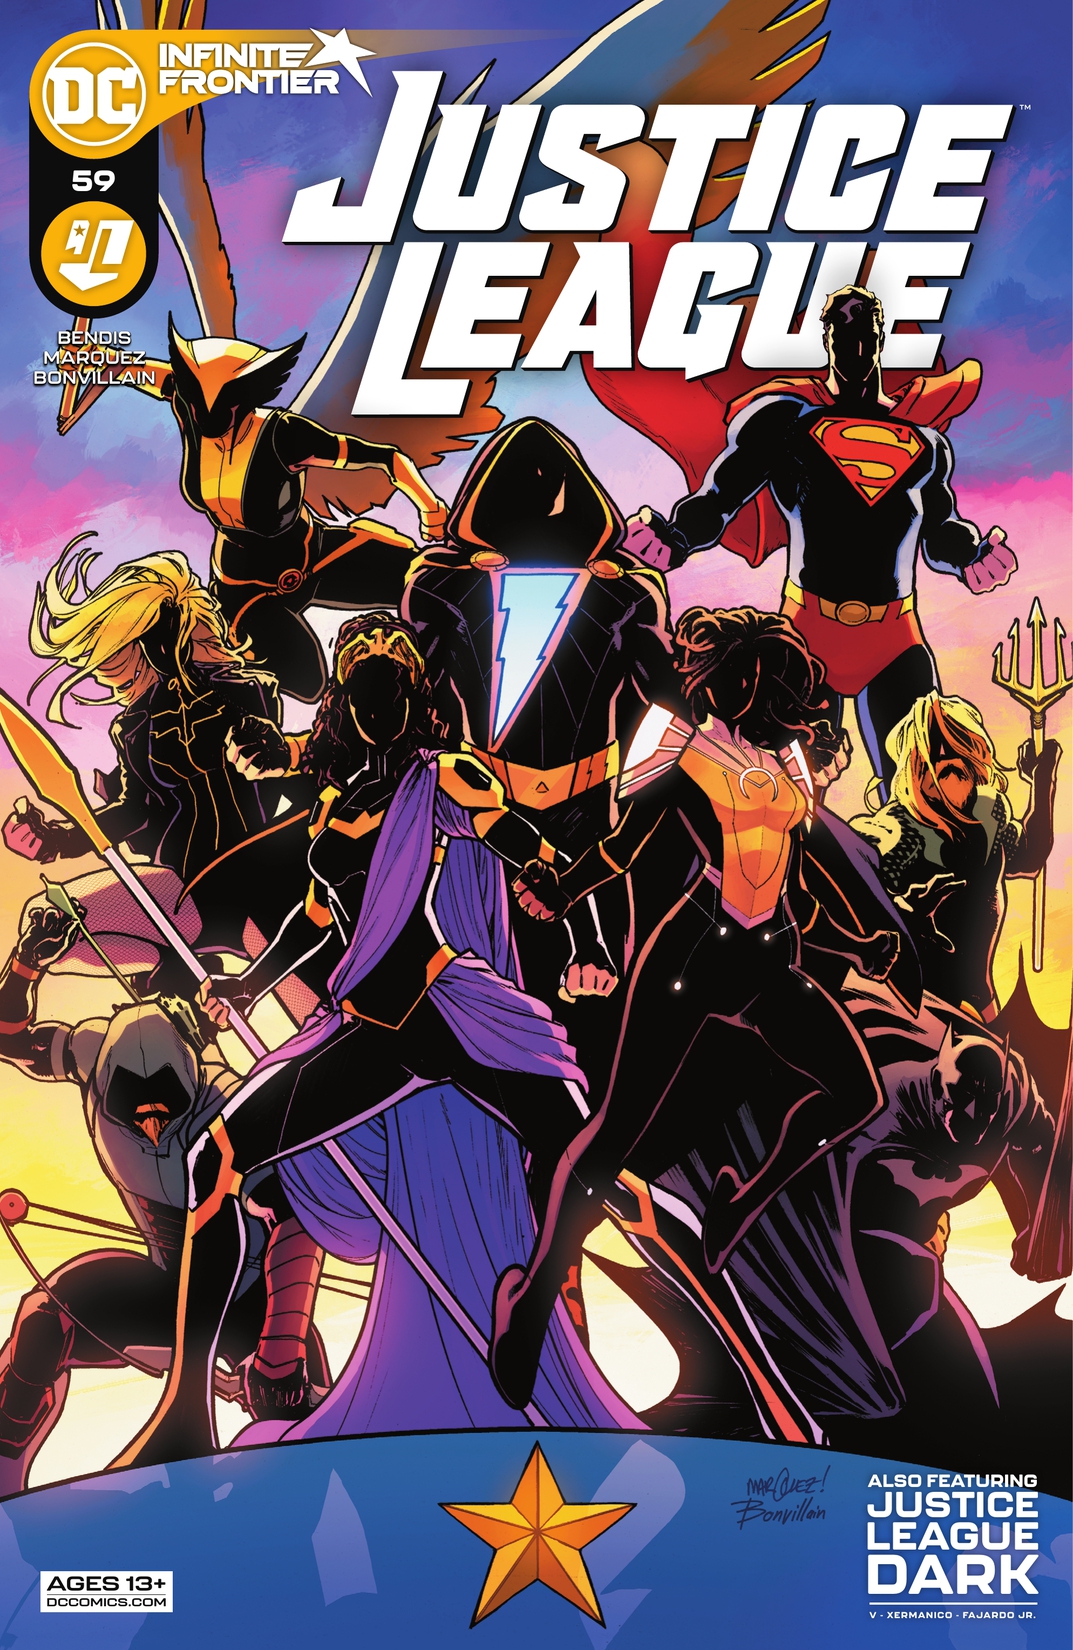 Justice League (2018-) #59 preview images